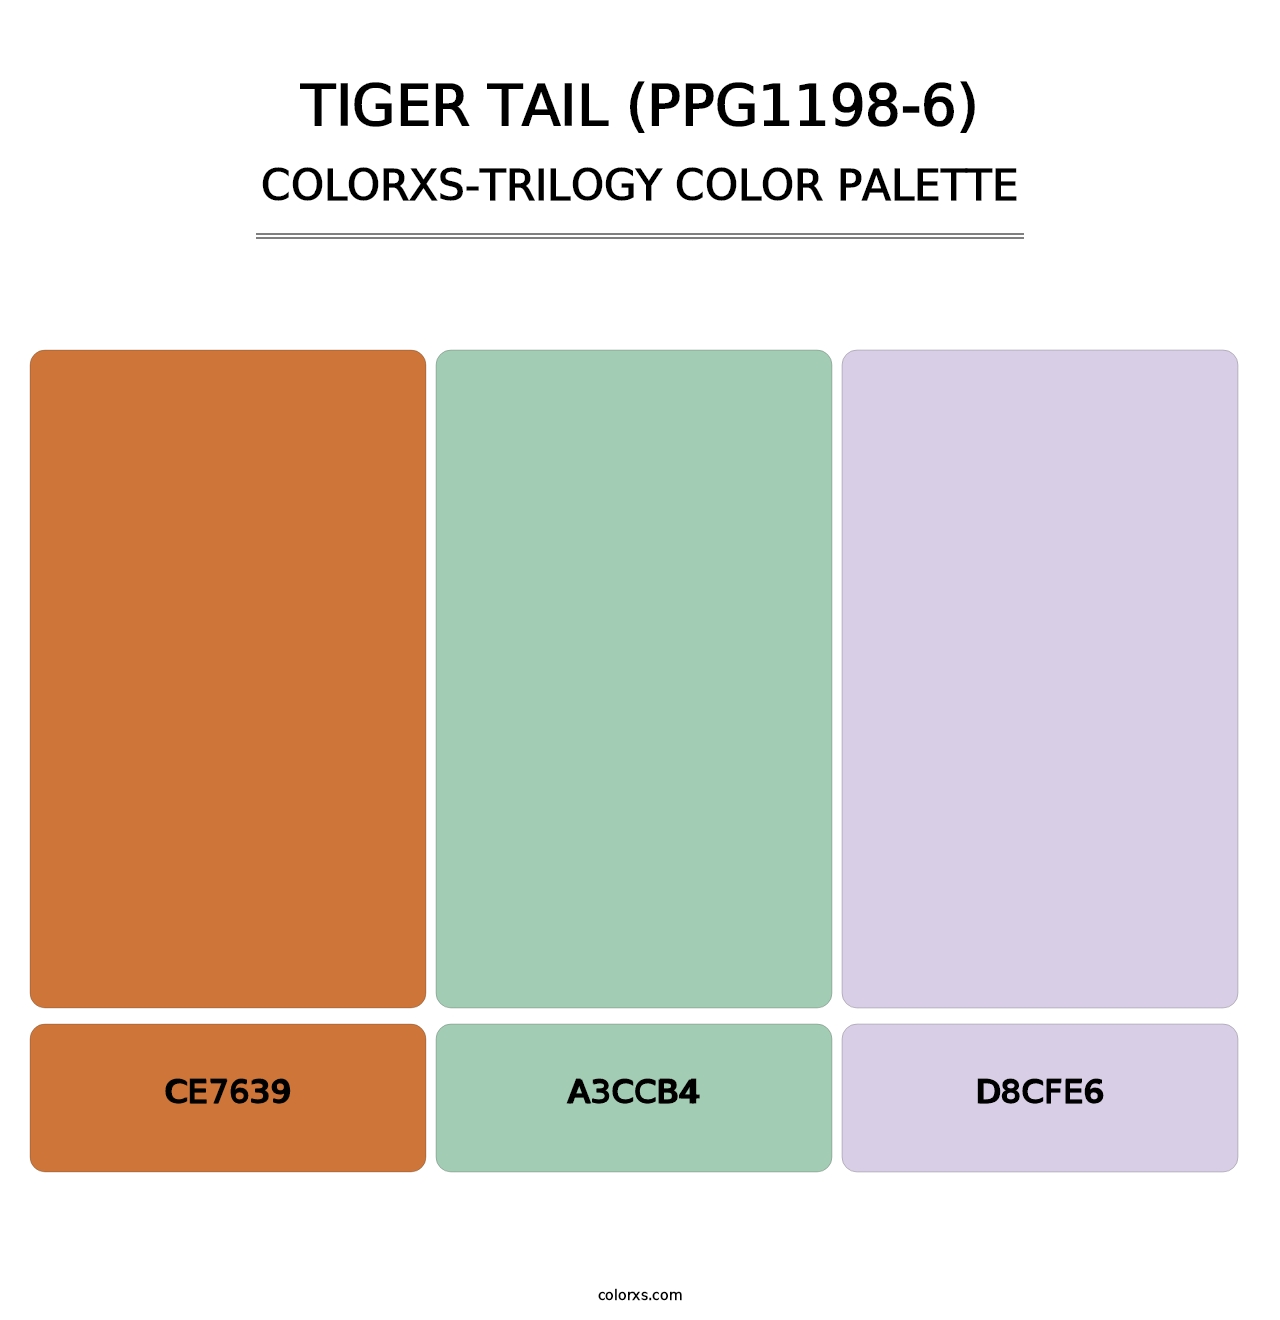 Tiger Tail (PPG1198-6) - Colorxs Trilogy Palette